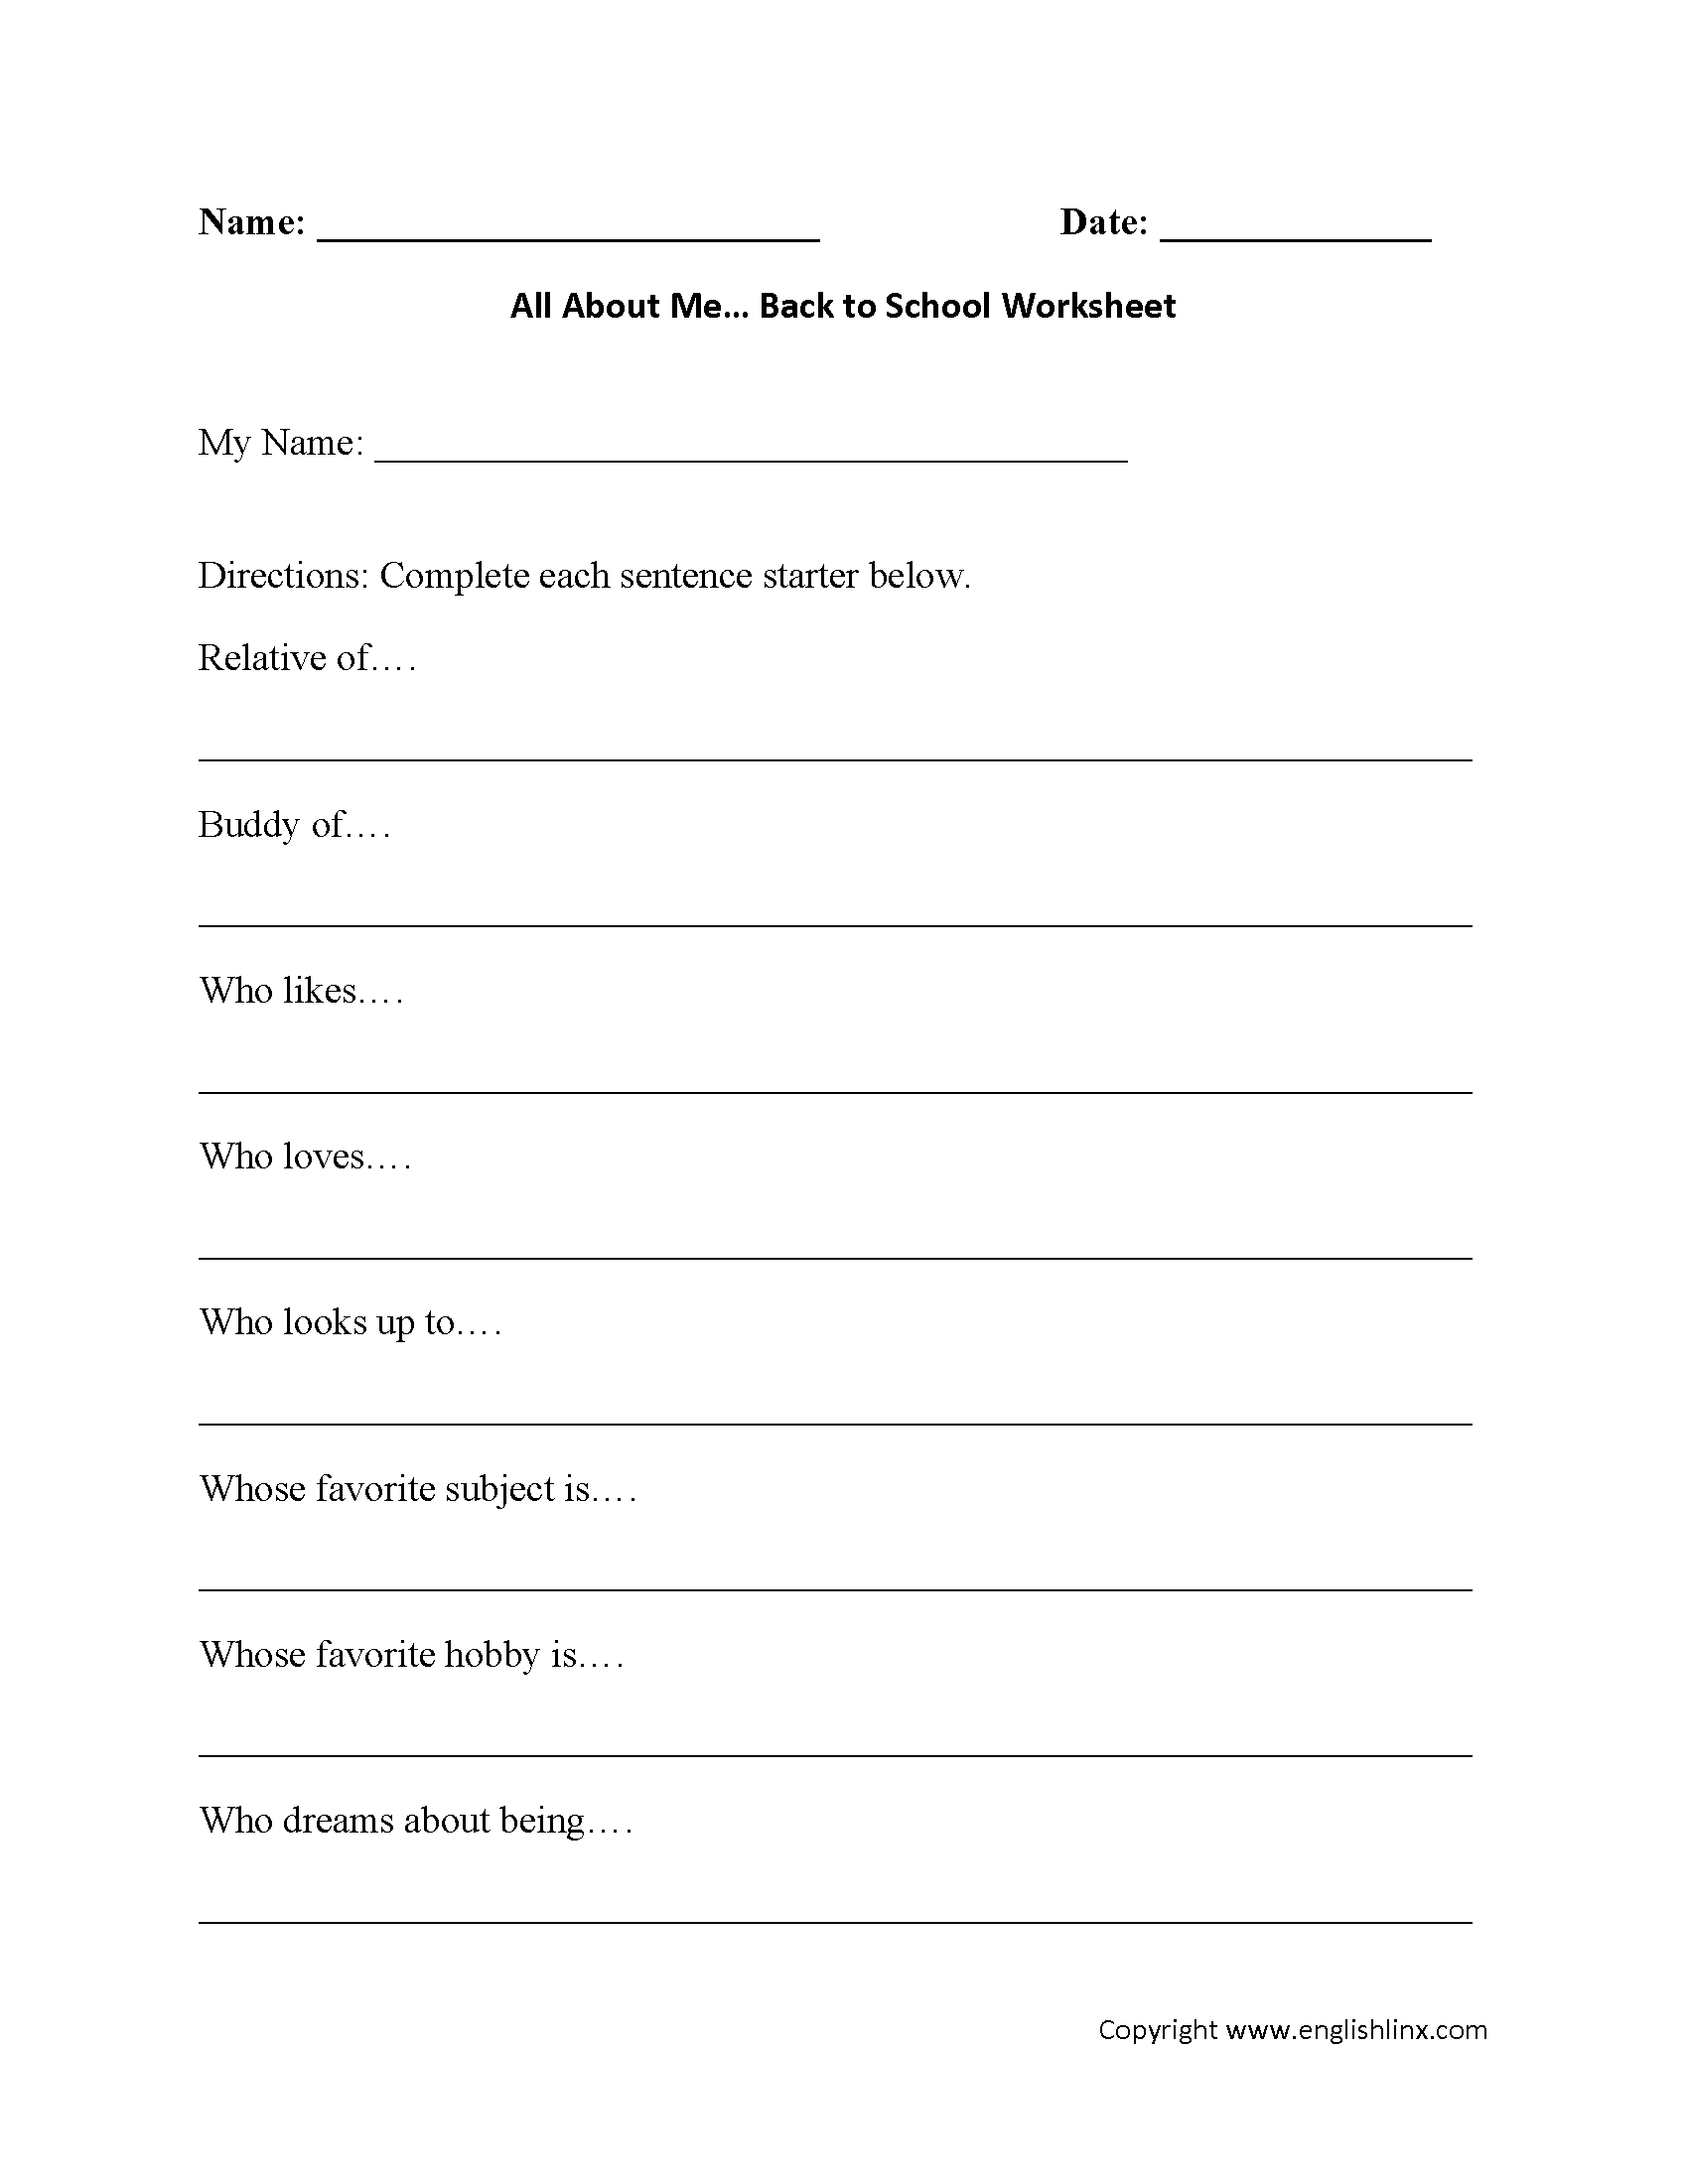 19 Best Images of Sentence Variety Worksheet - 1st Grade Word Problems Worksheets, Sentence ...